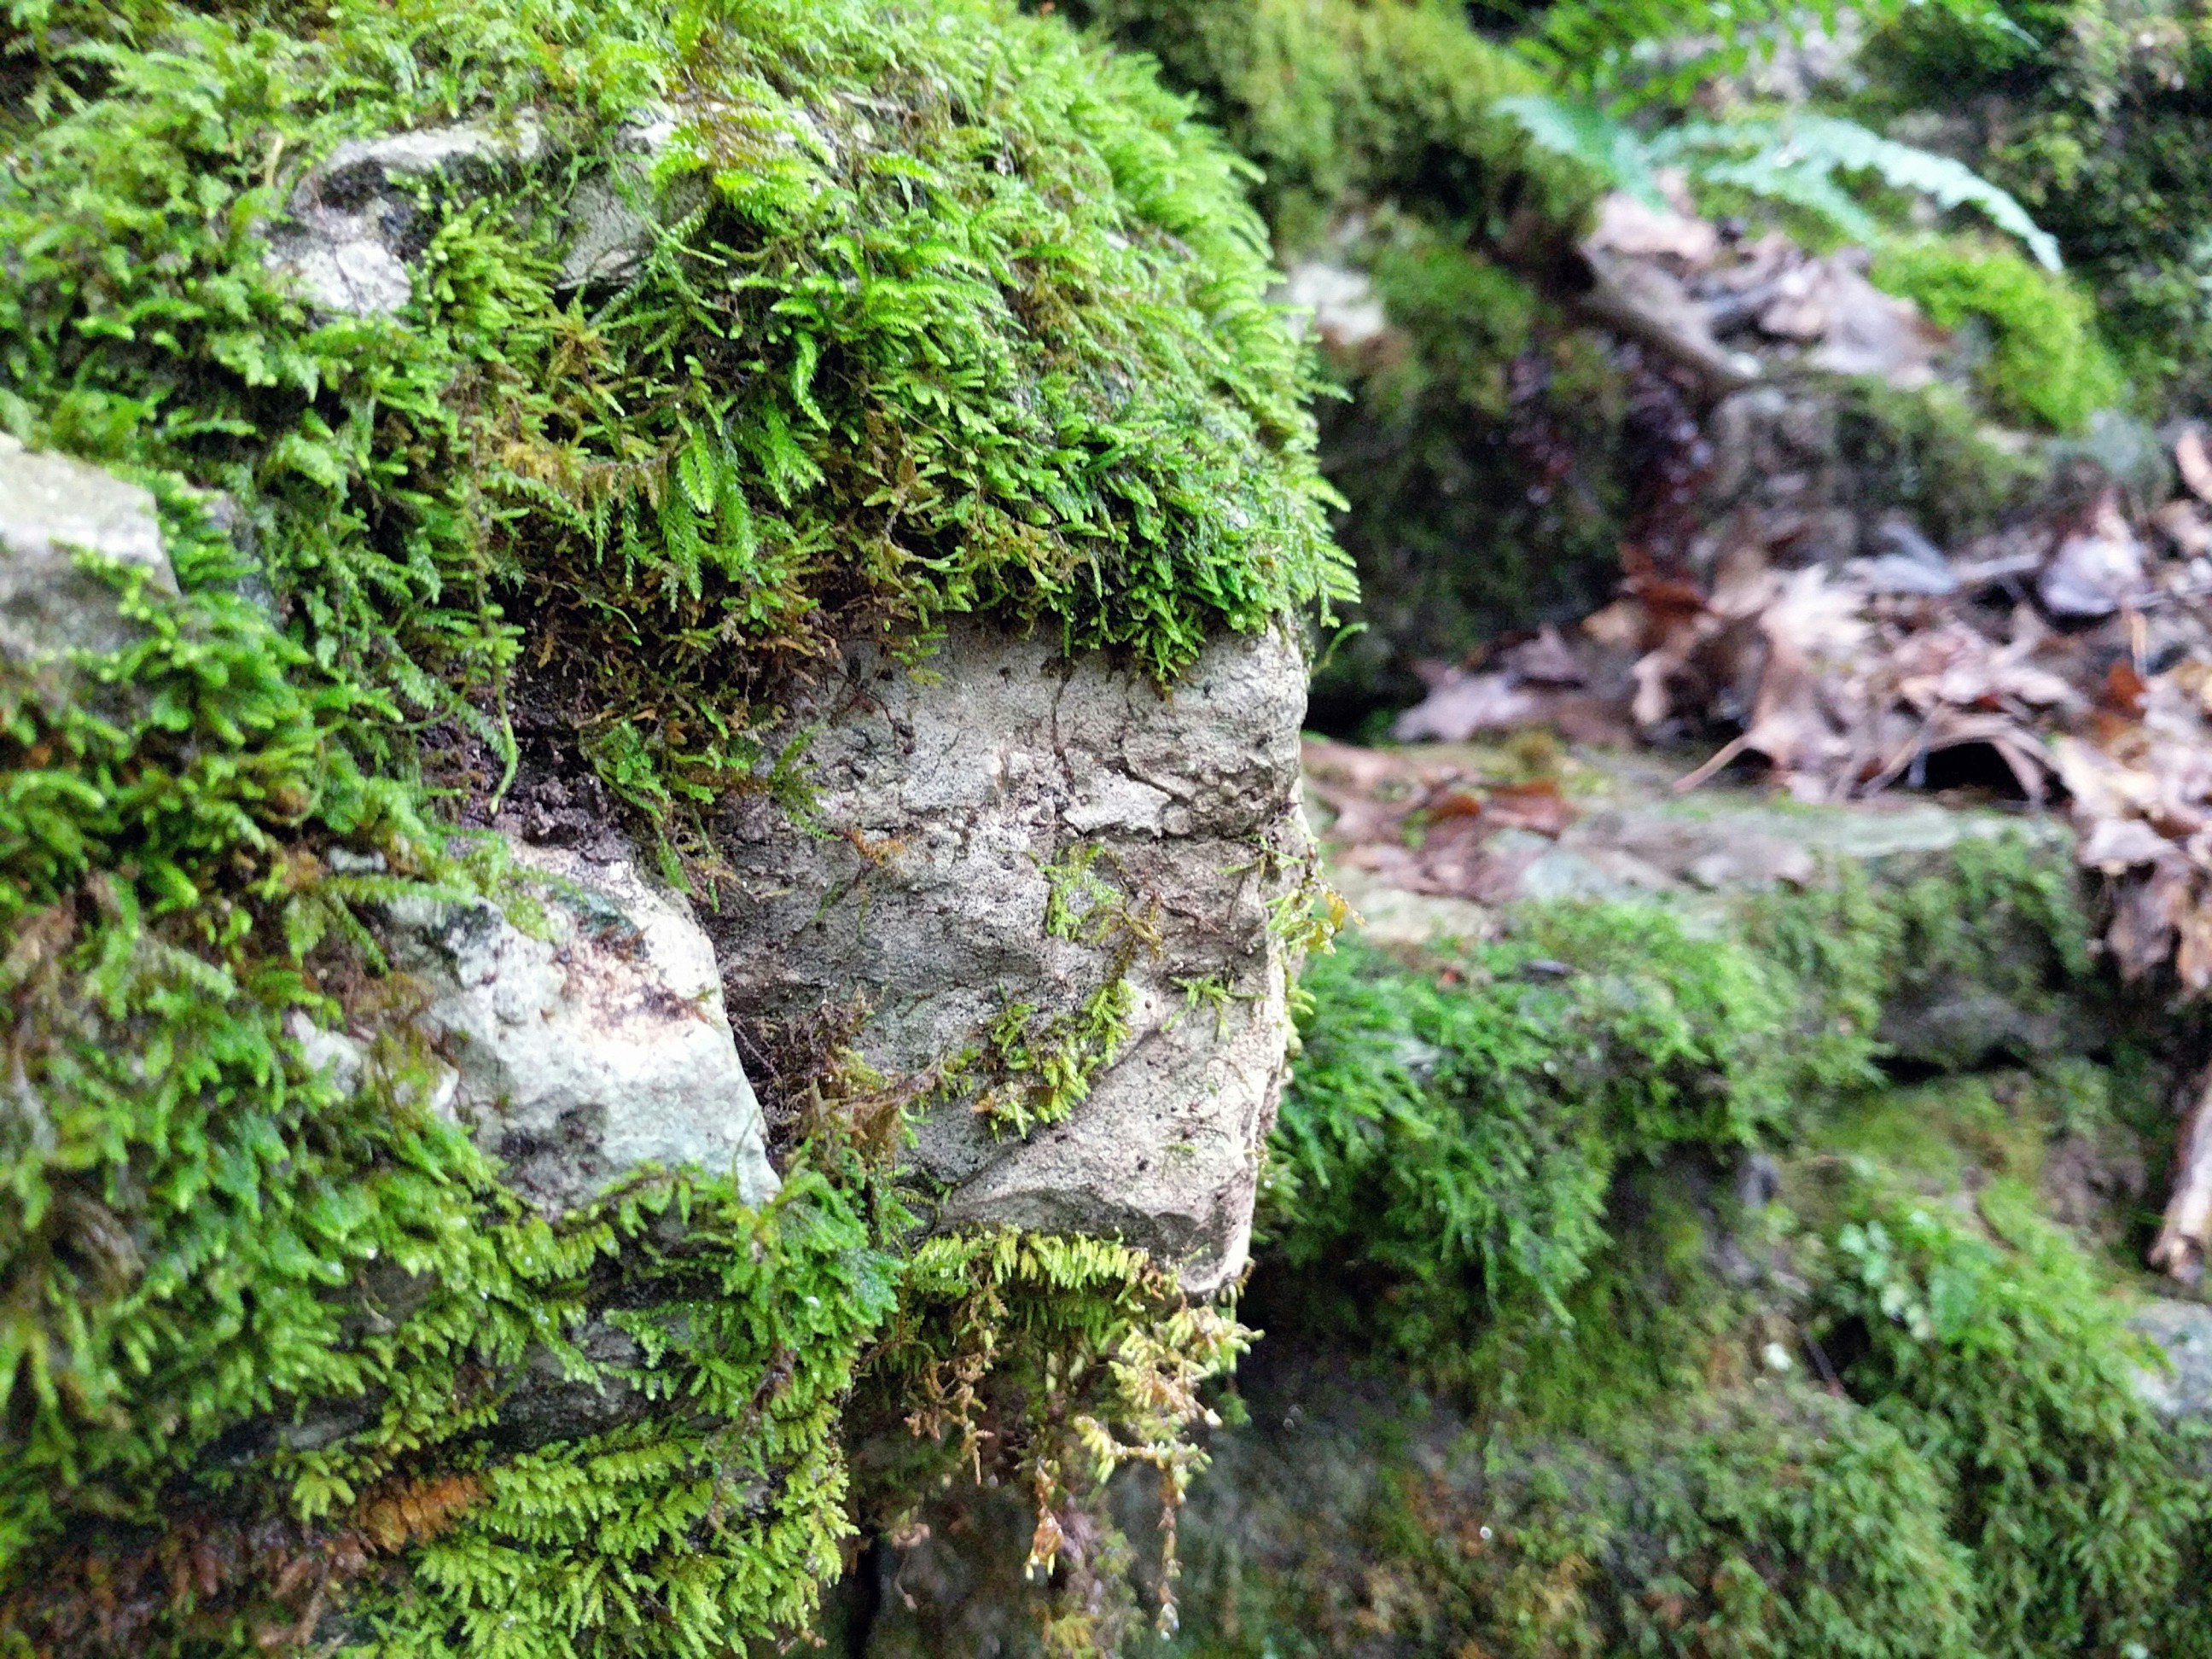 Moss growing on a rock.